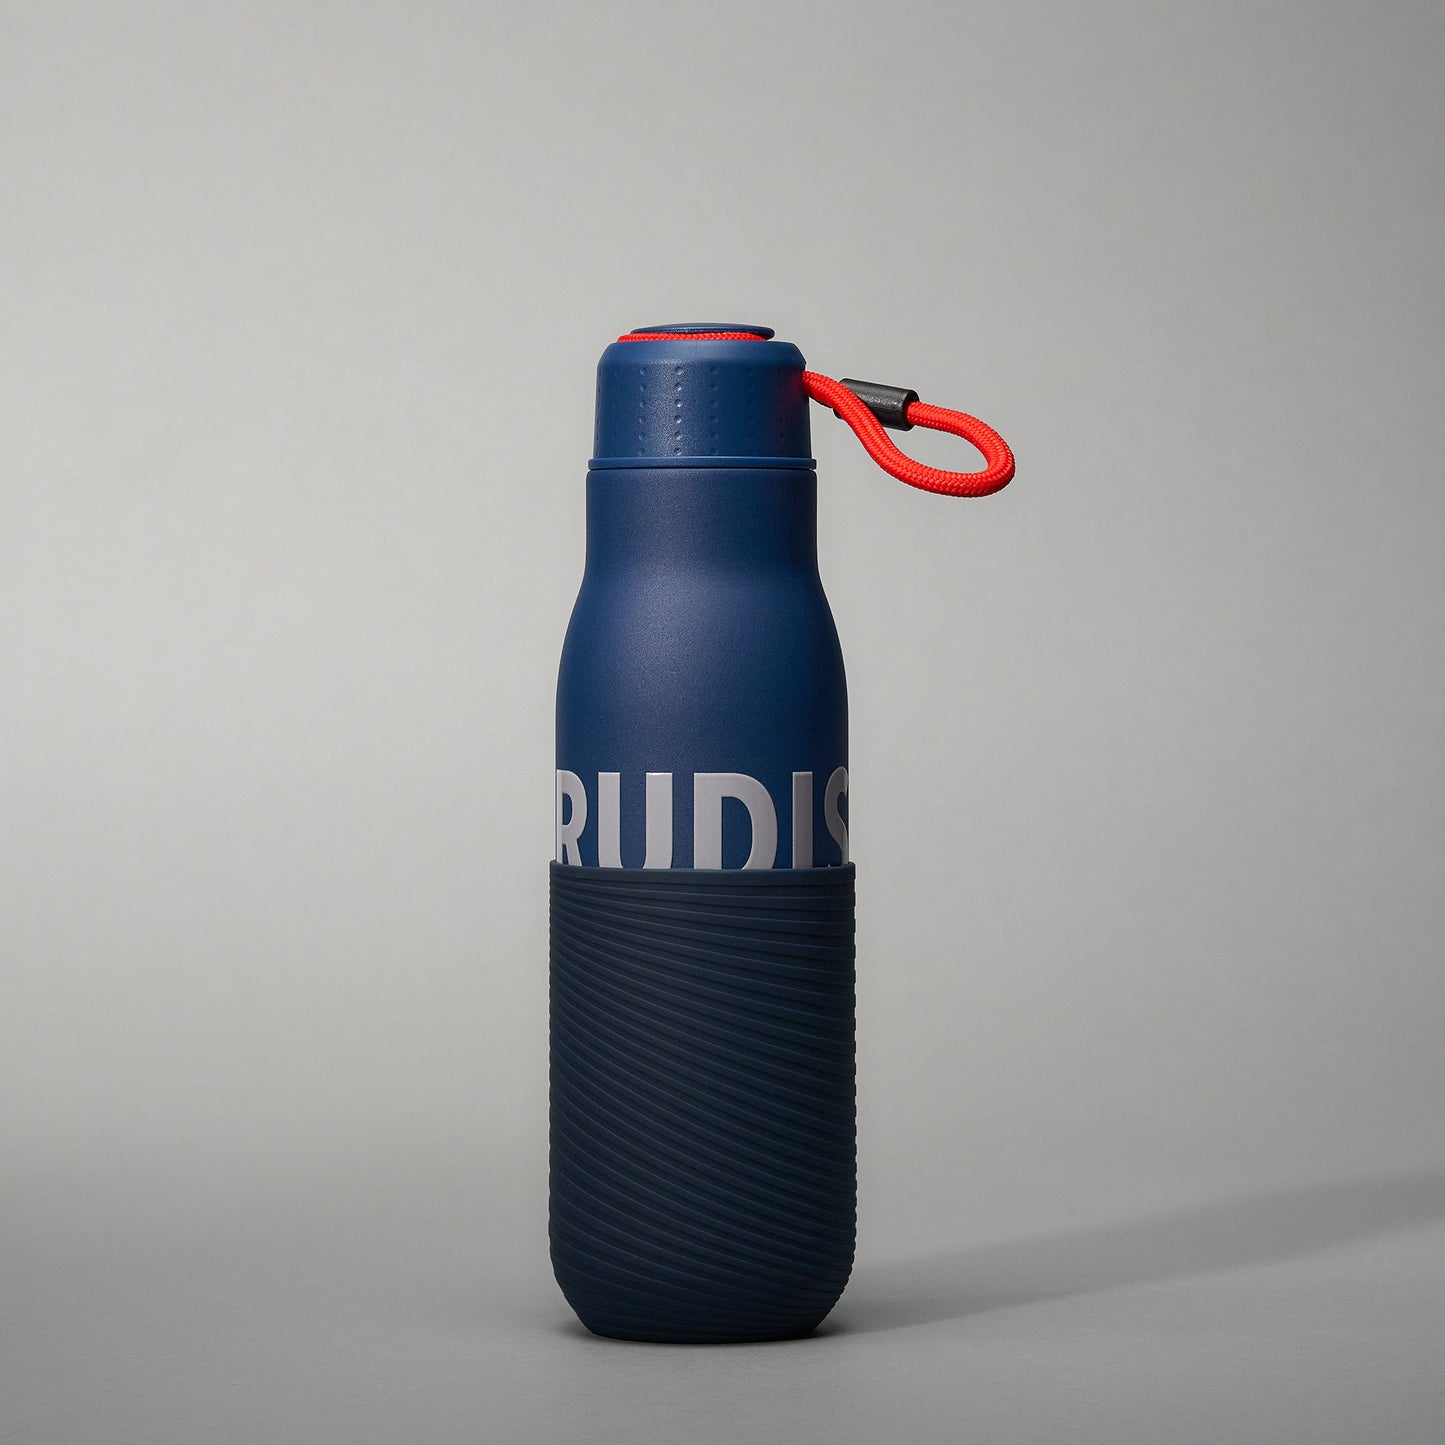 RUDIS 500ml Stainless Steel Water Bottle